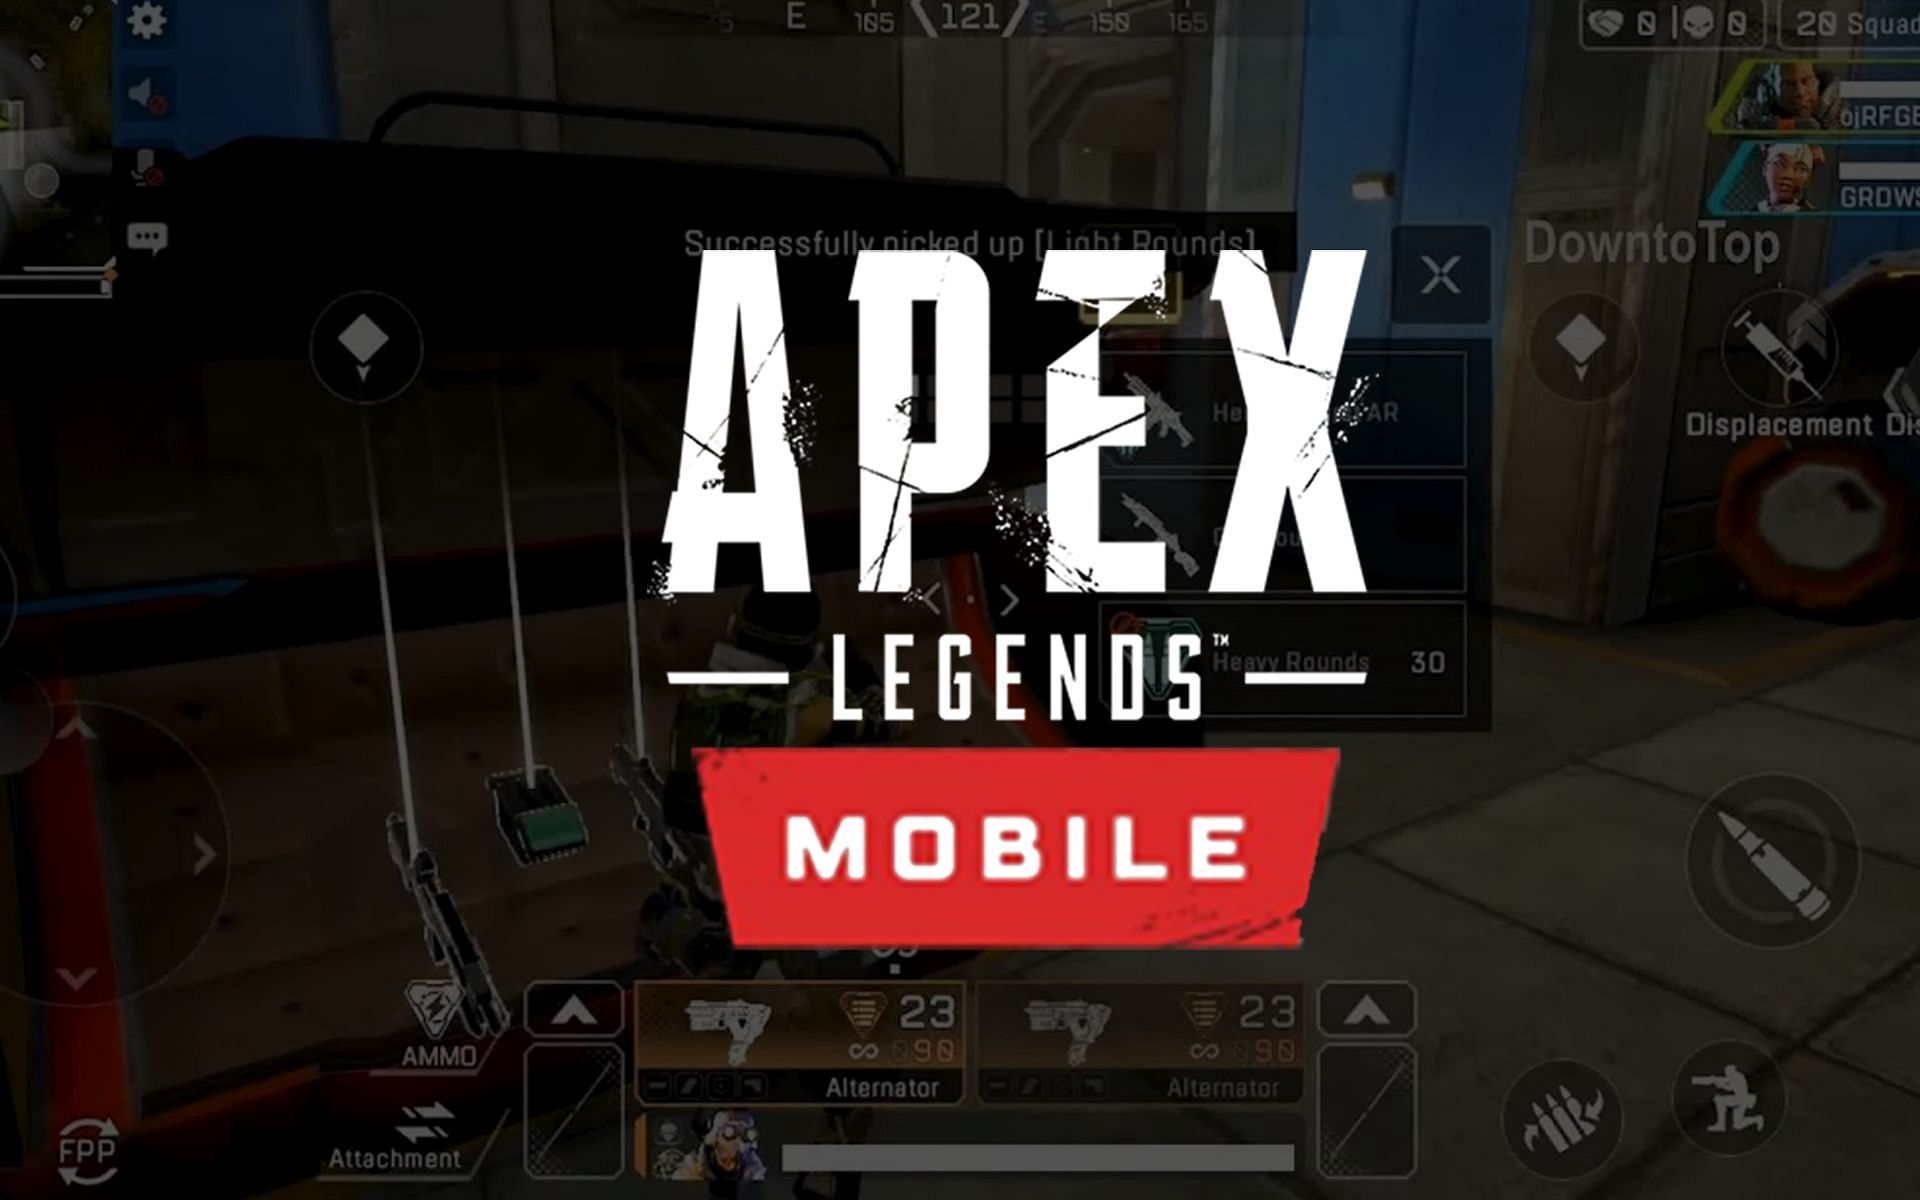 Apex Legends™: Hunted